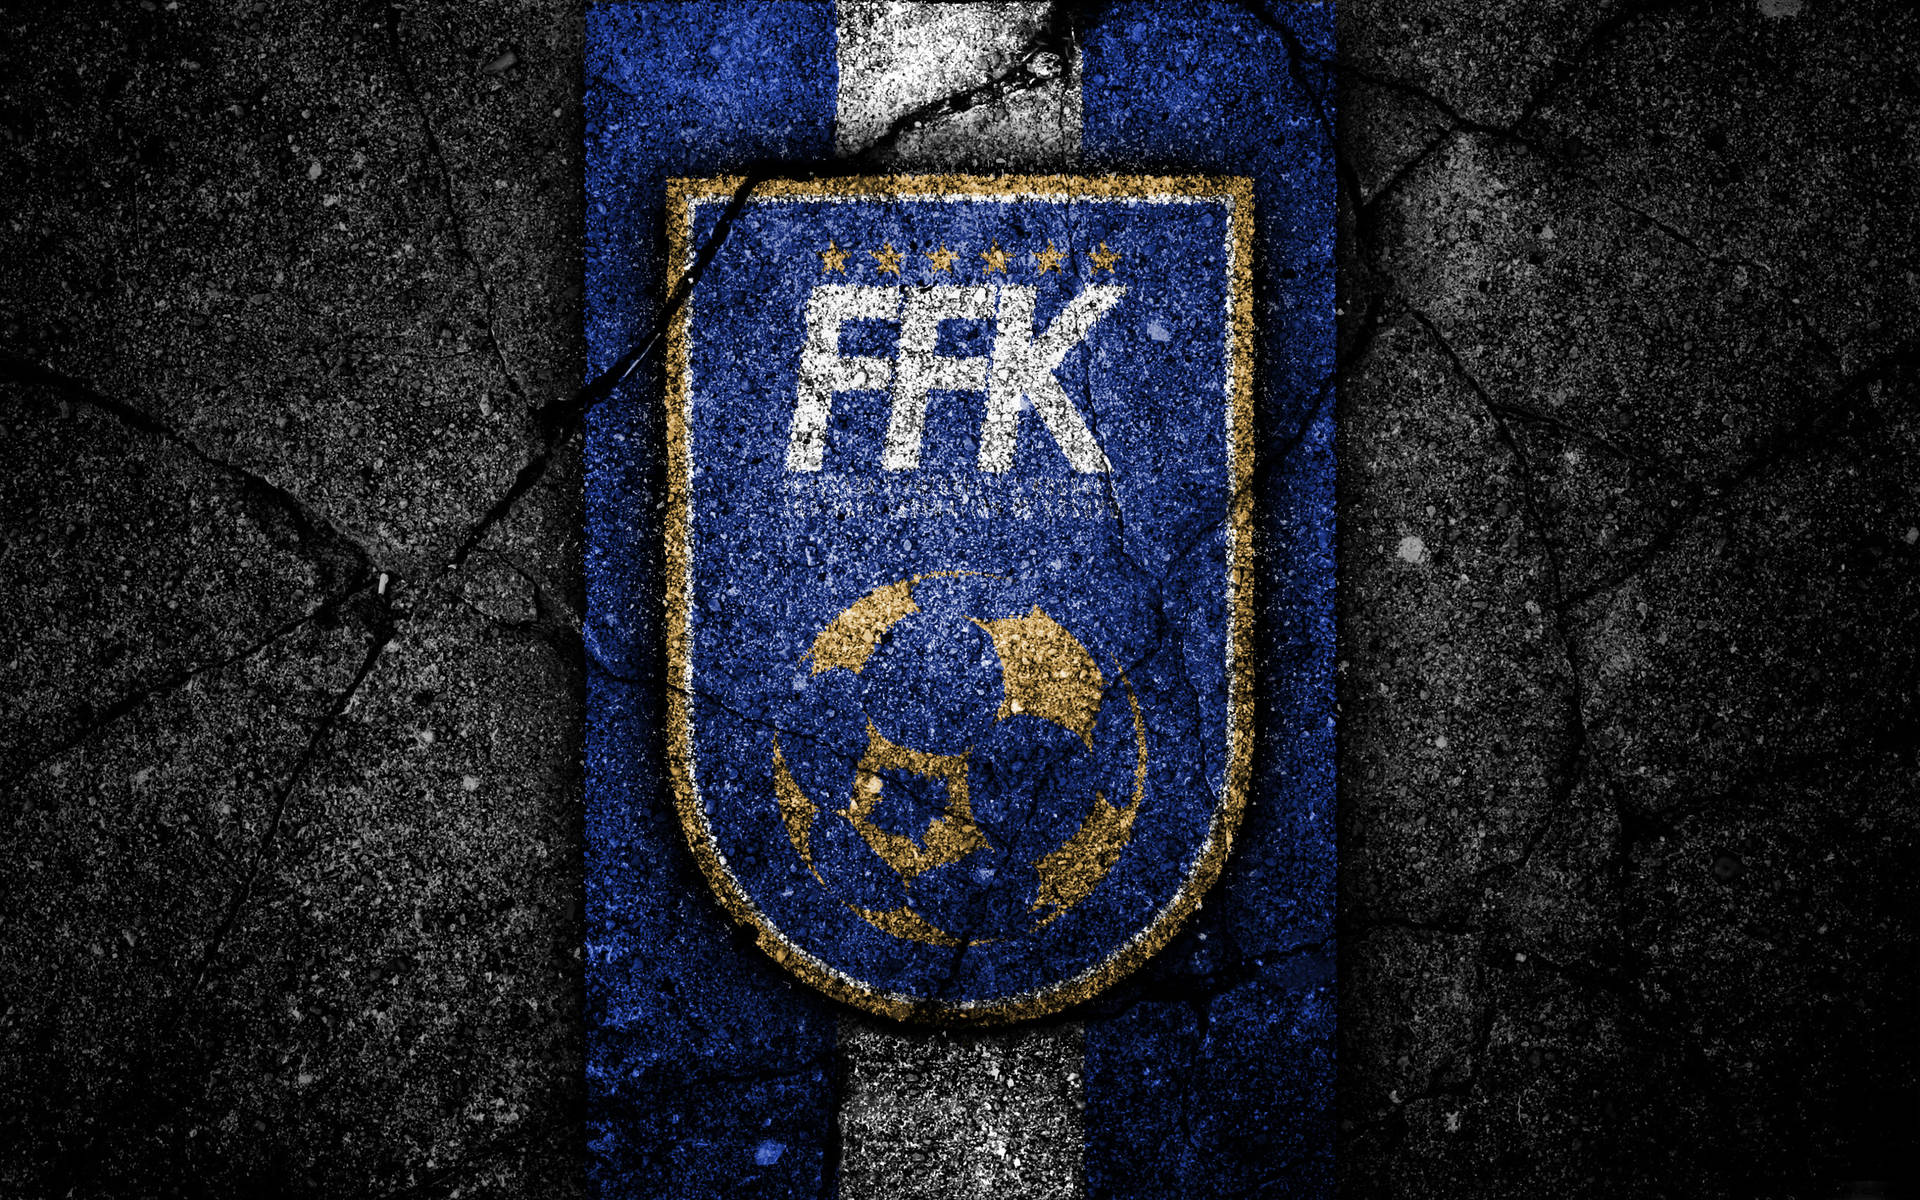 Kosovo Football Federation Graphic Background